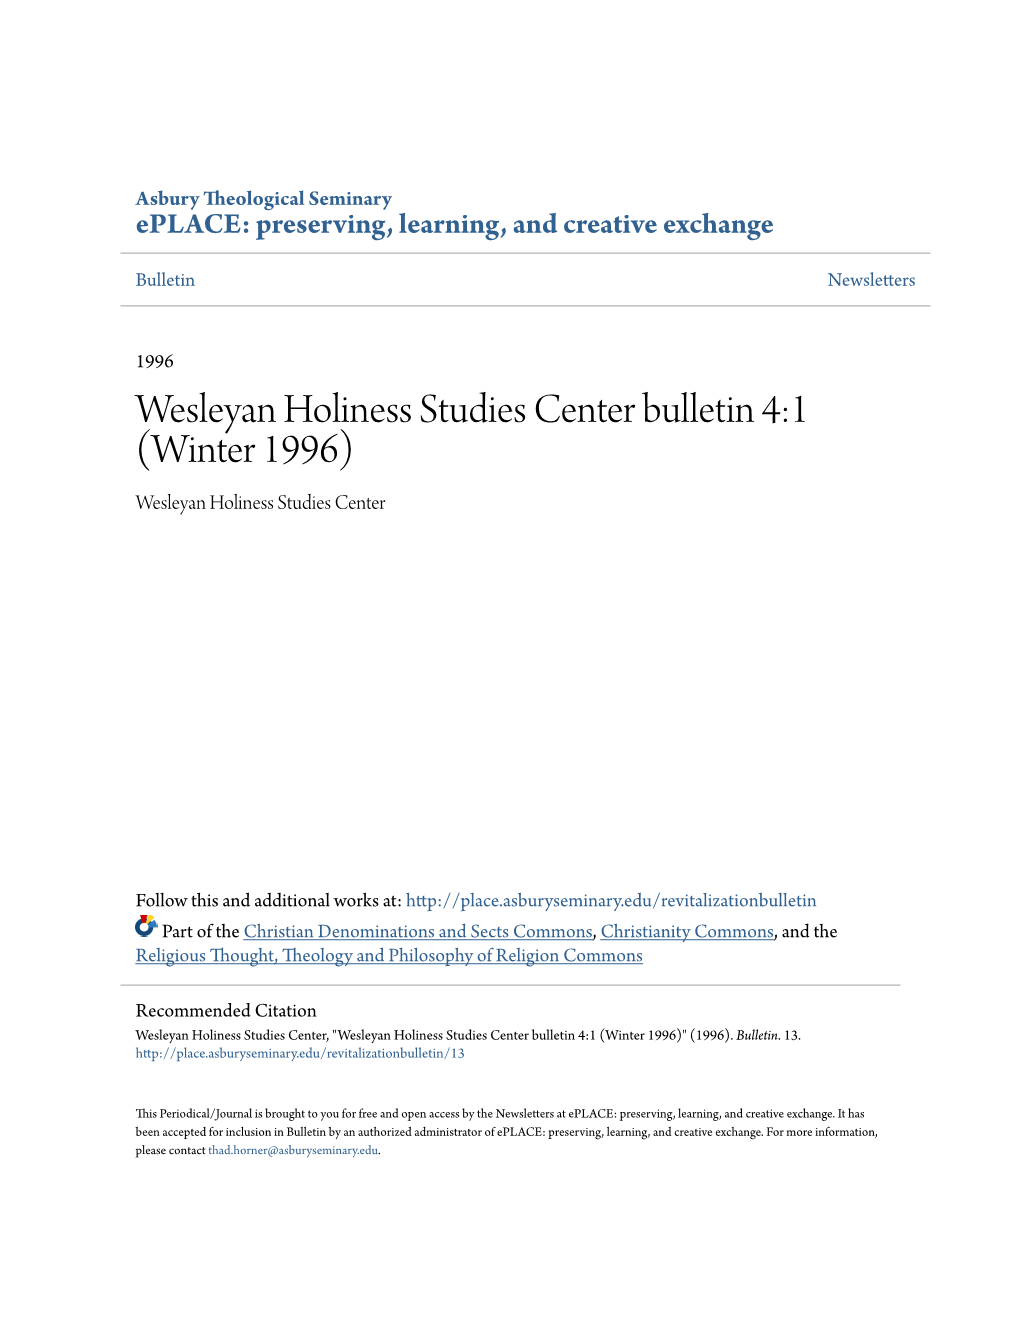 Wesleyan Holiness Studies Center Bulletin 4:1 (Winter 1996) Wesleyan Holiness Studies Center